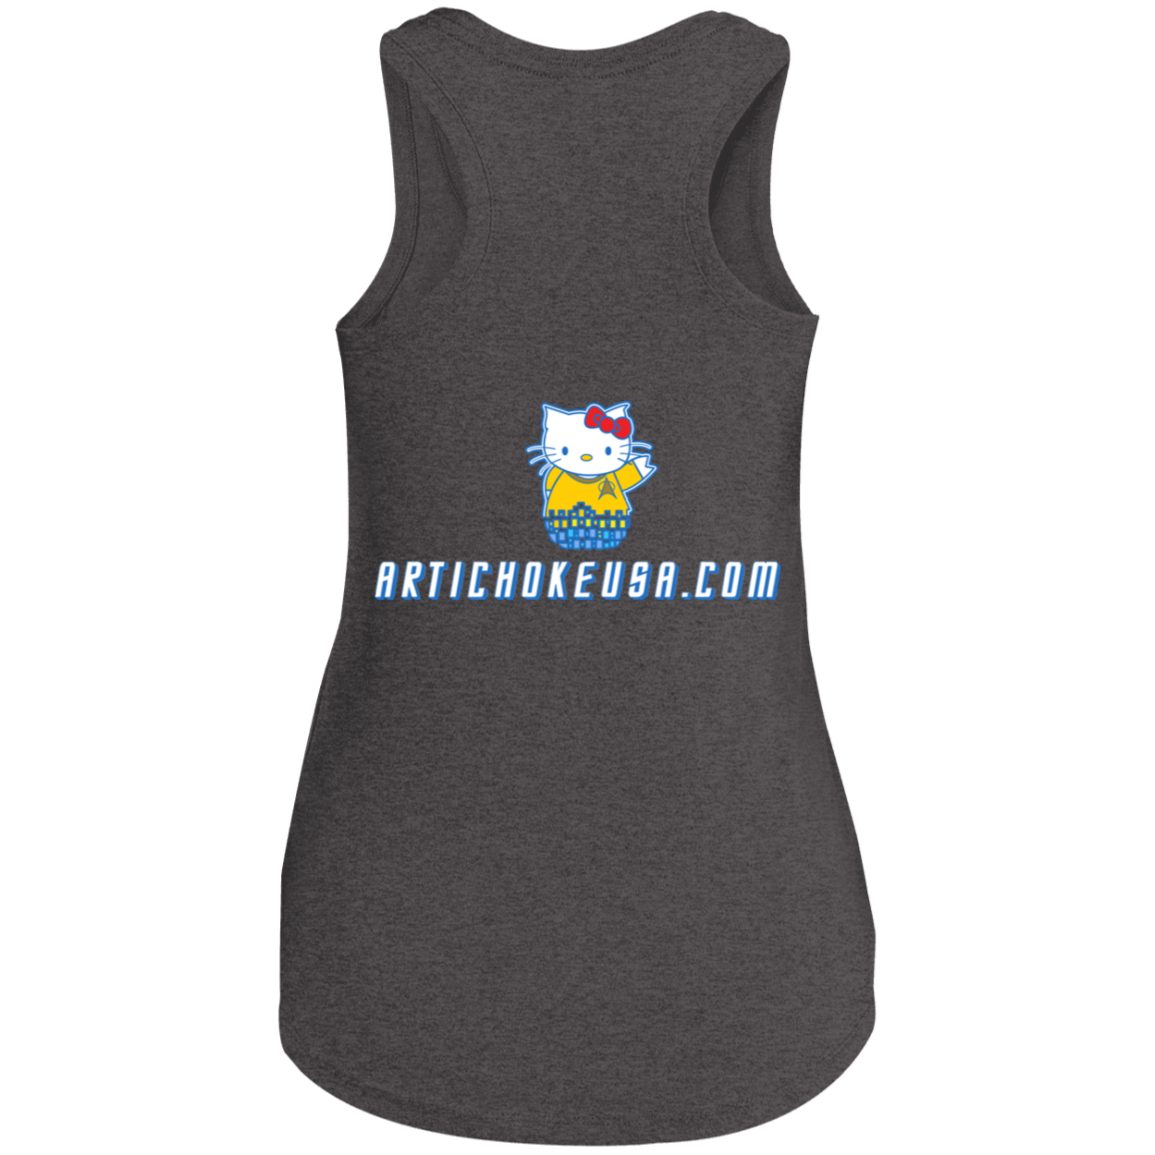 ArtichokeUSA Custom Design. Beam Me Up Kitty. Fan Art / Parody. Ladies' Tri Racerback Tank